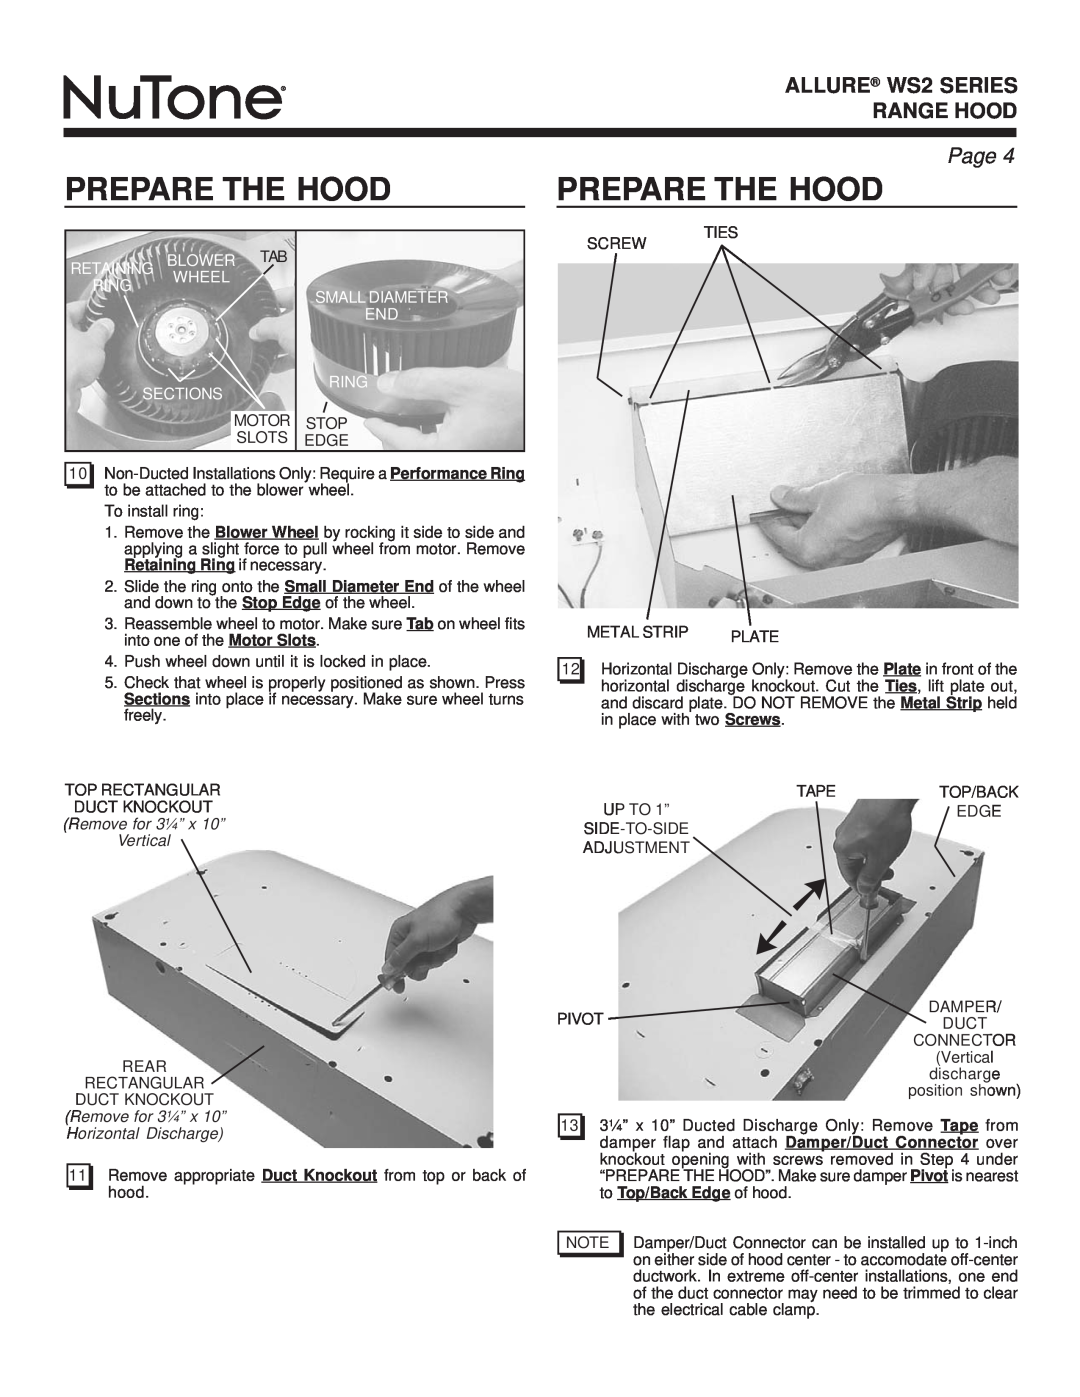 NuTone warranty Prepare The Hood, ALLURE WS2 SERIES RANGE HOOD, Page, Retaining Blower Tab Ring Wheel Sections 